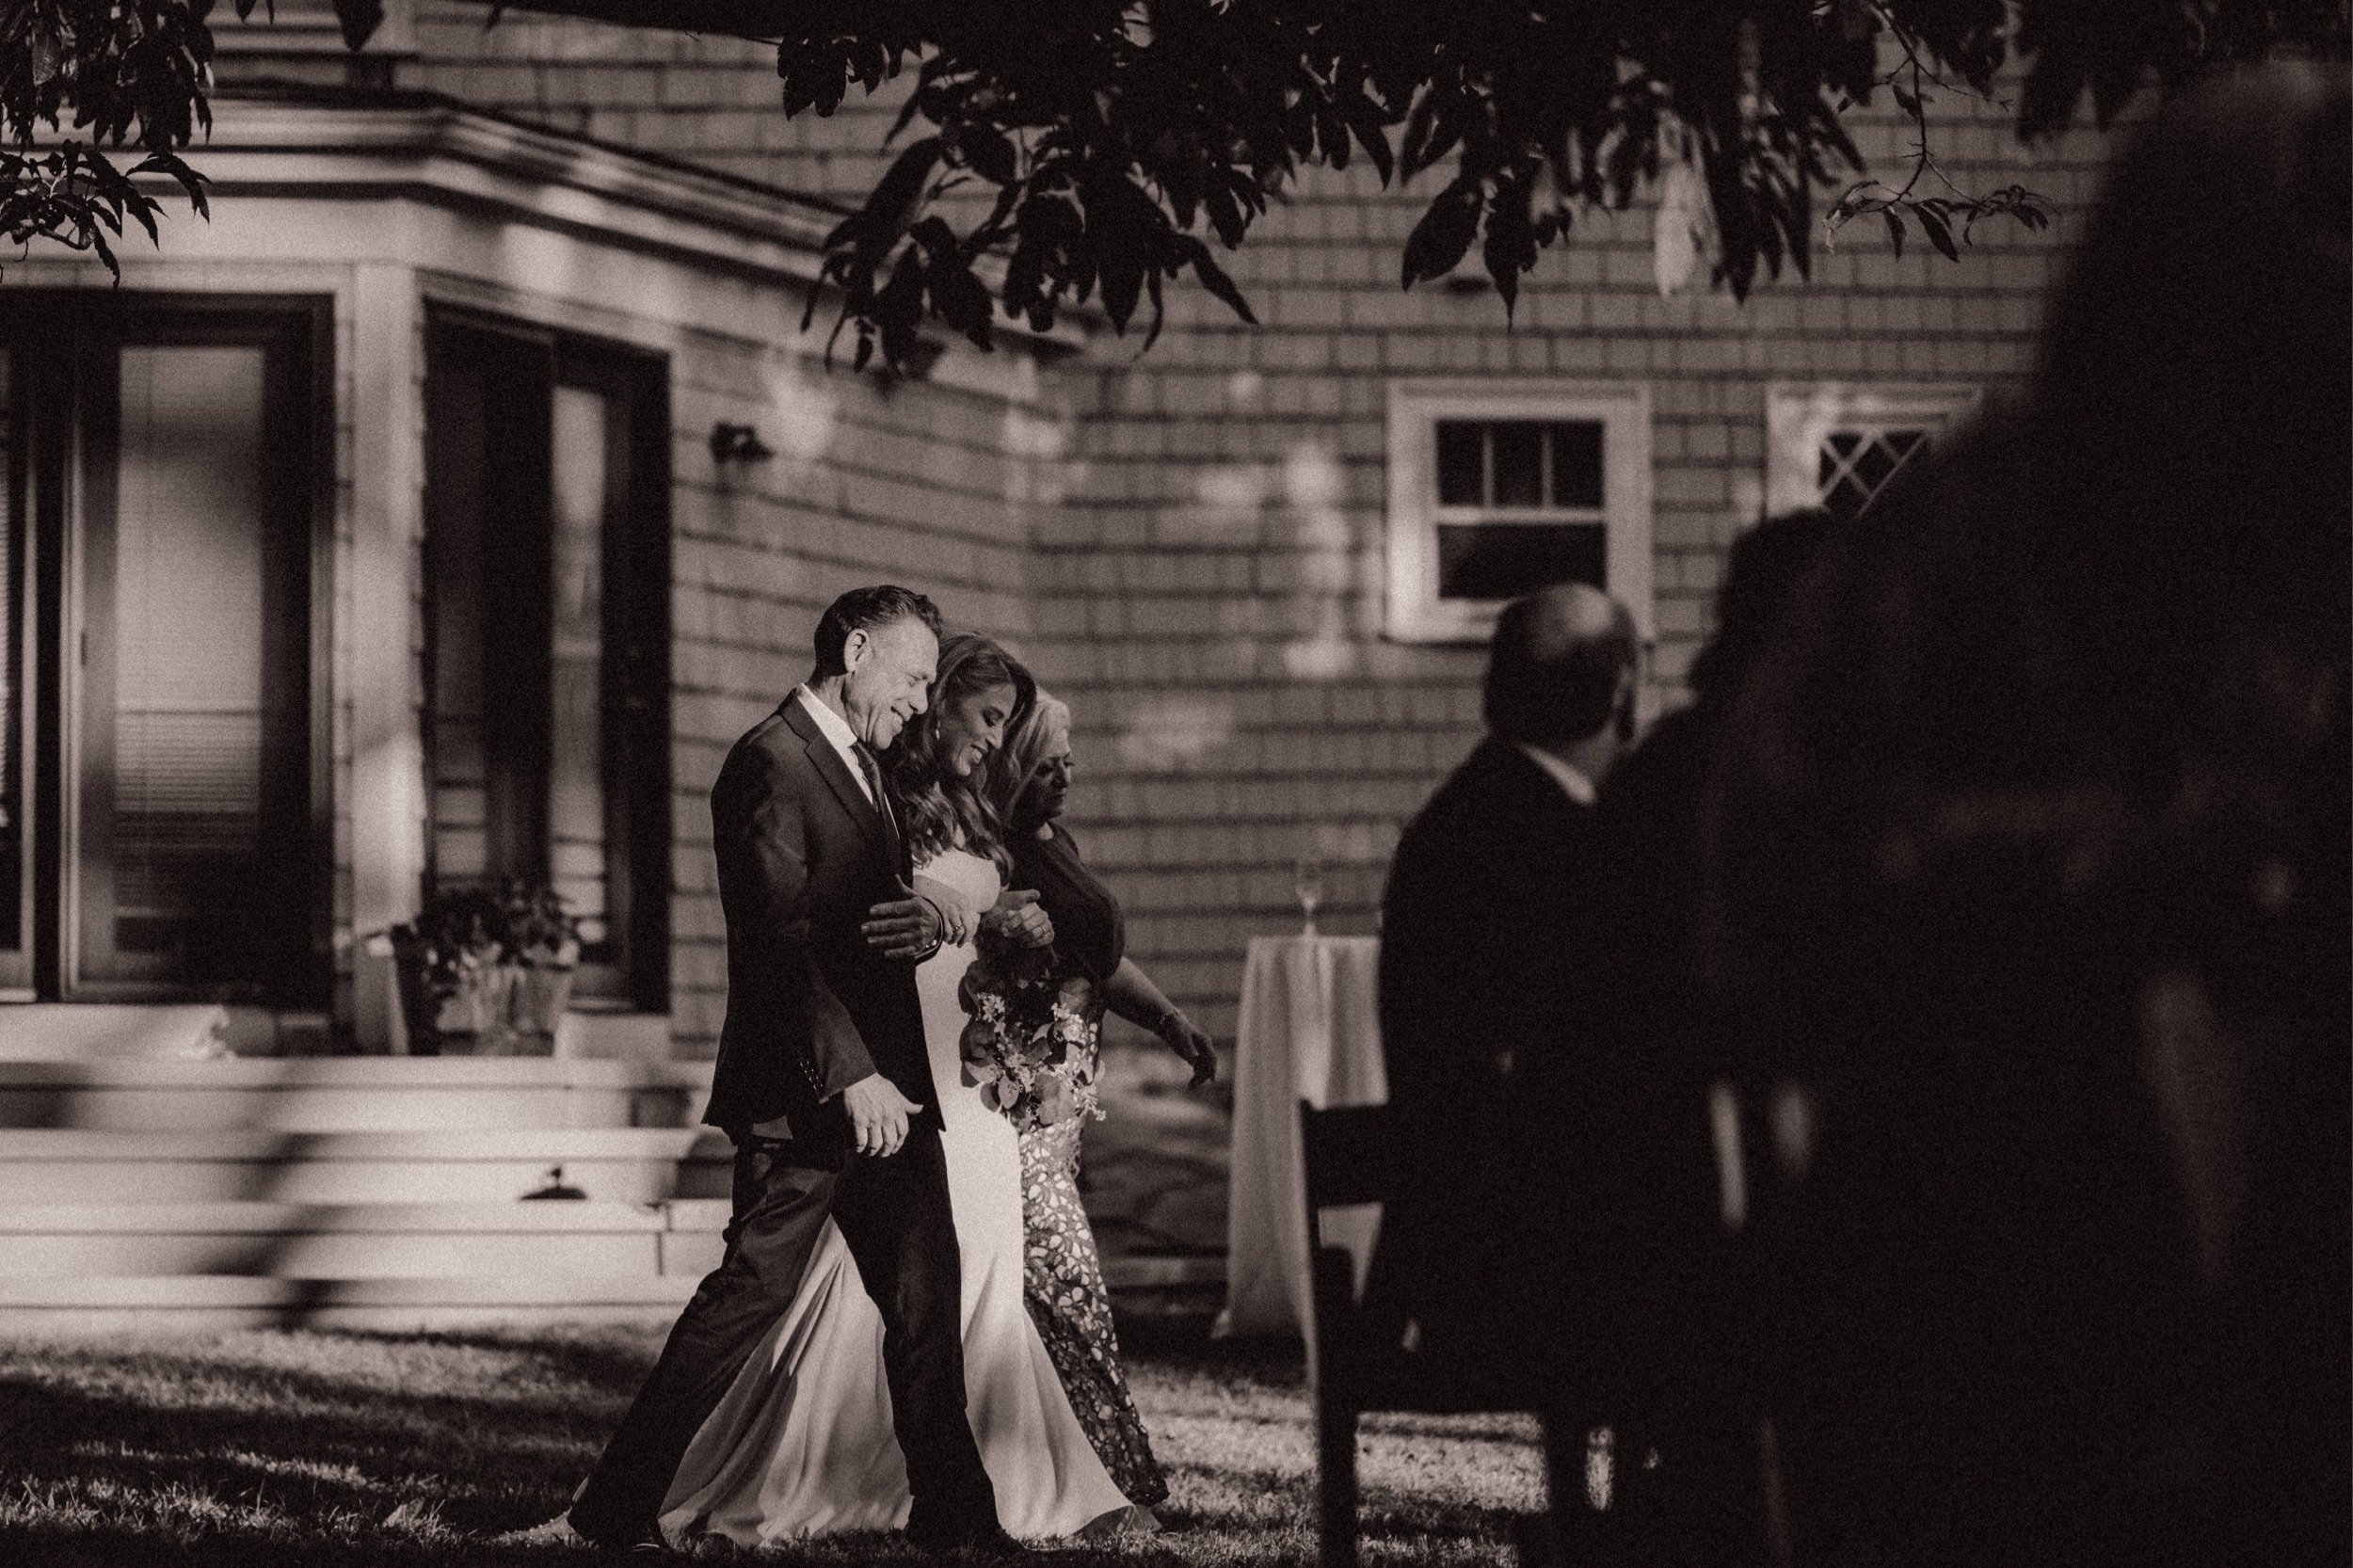 064_Timeless Backyard Wedding in Rhode Island - Vanessa Alves Photography.jpg